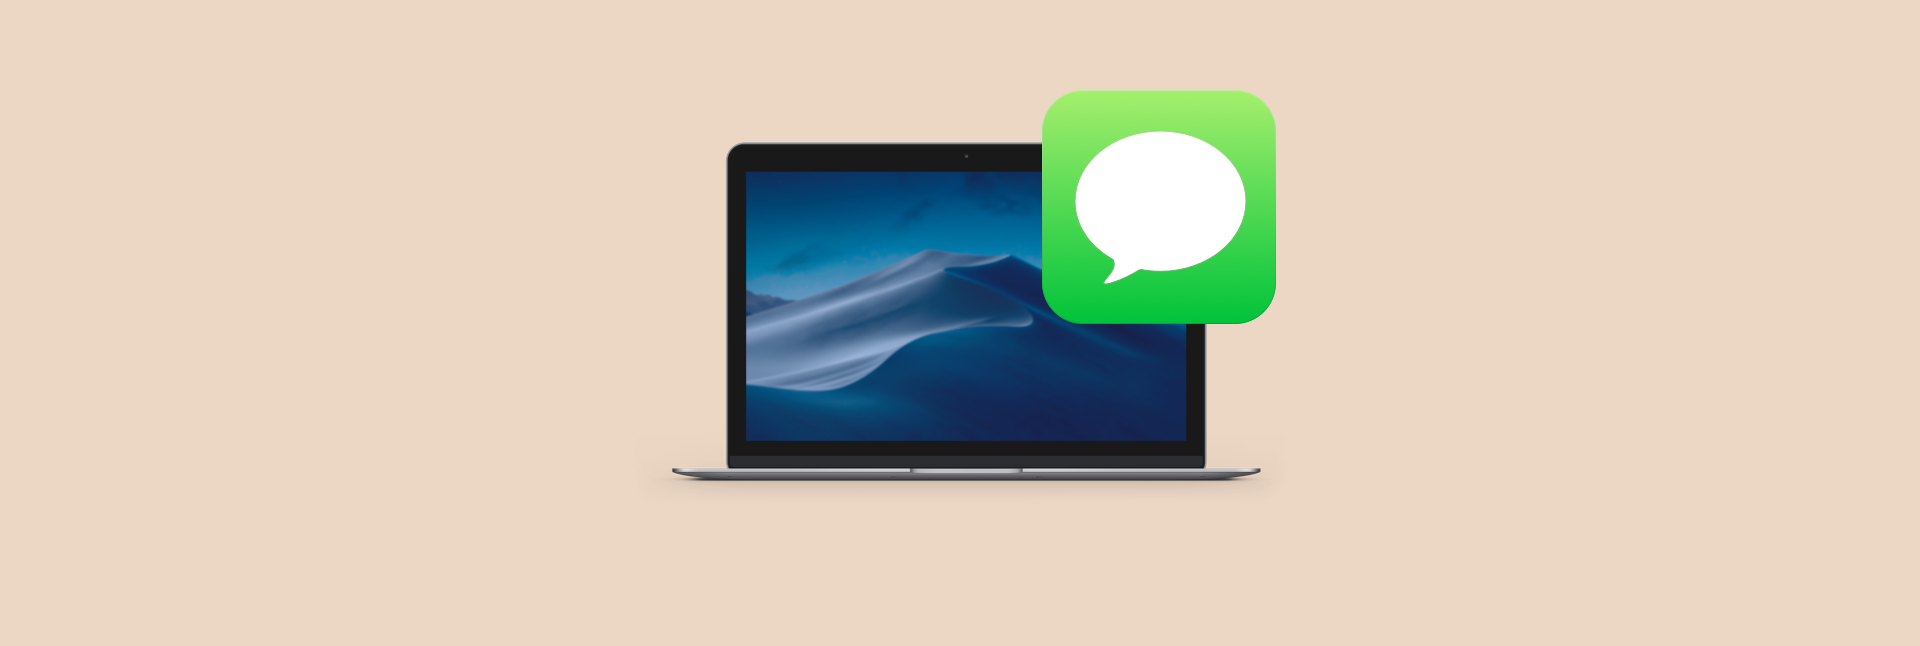 facebook messenger app for mac desktop